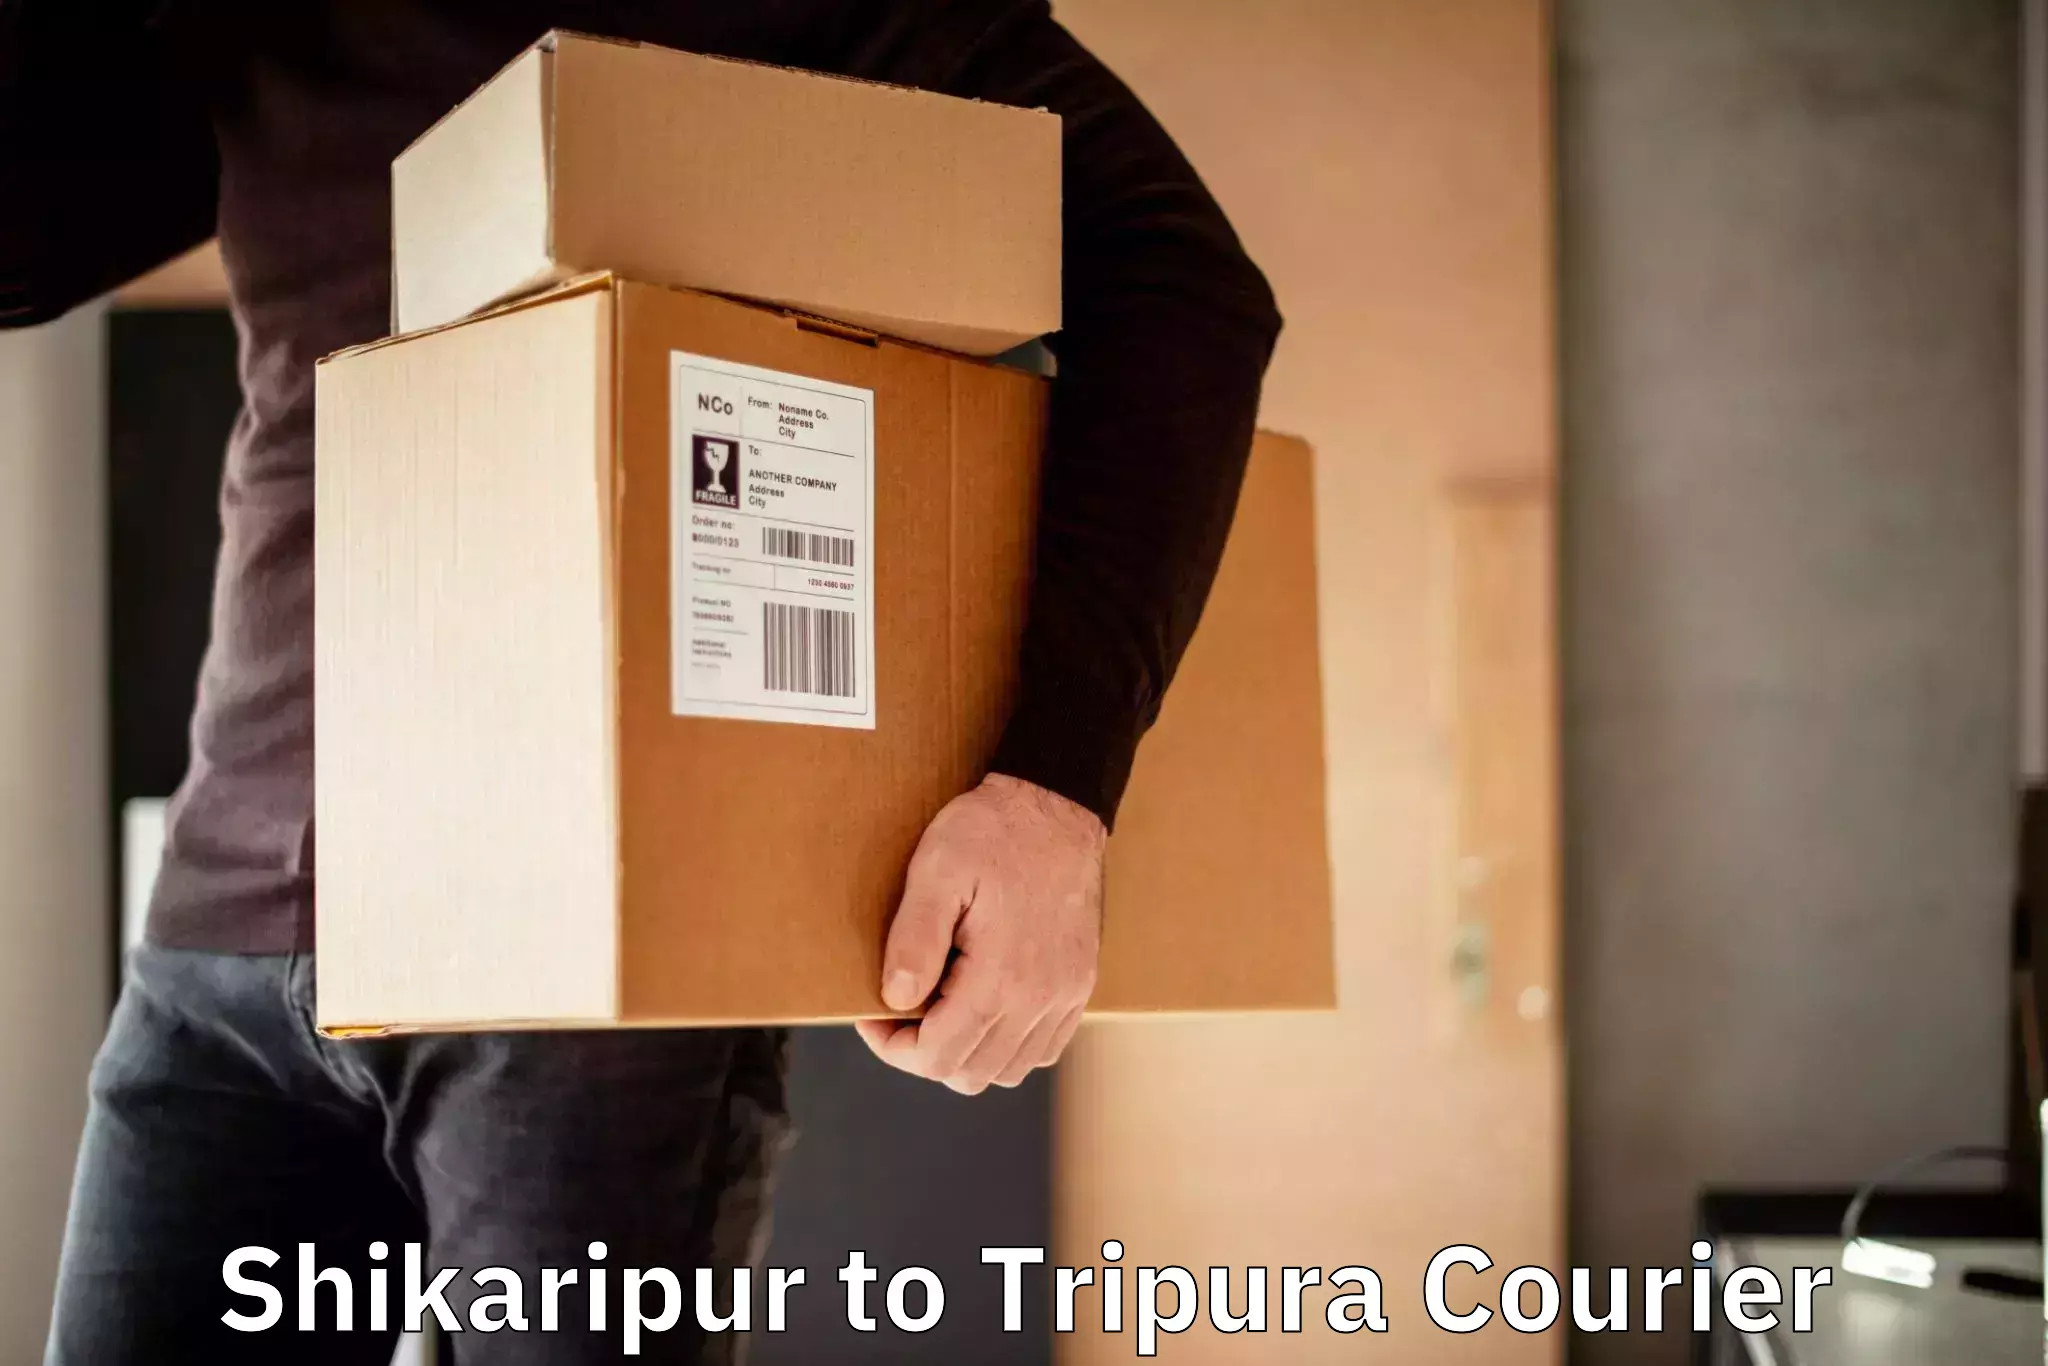 24/7 courier service Shikaripur to Agartala